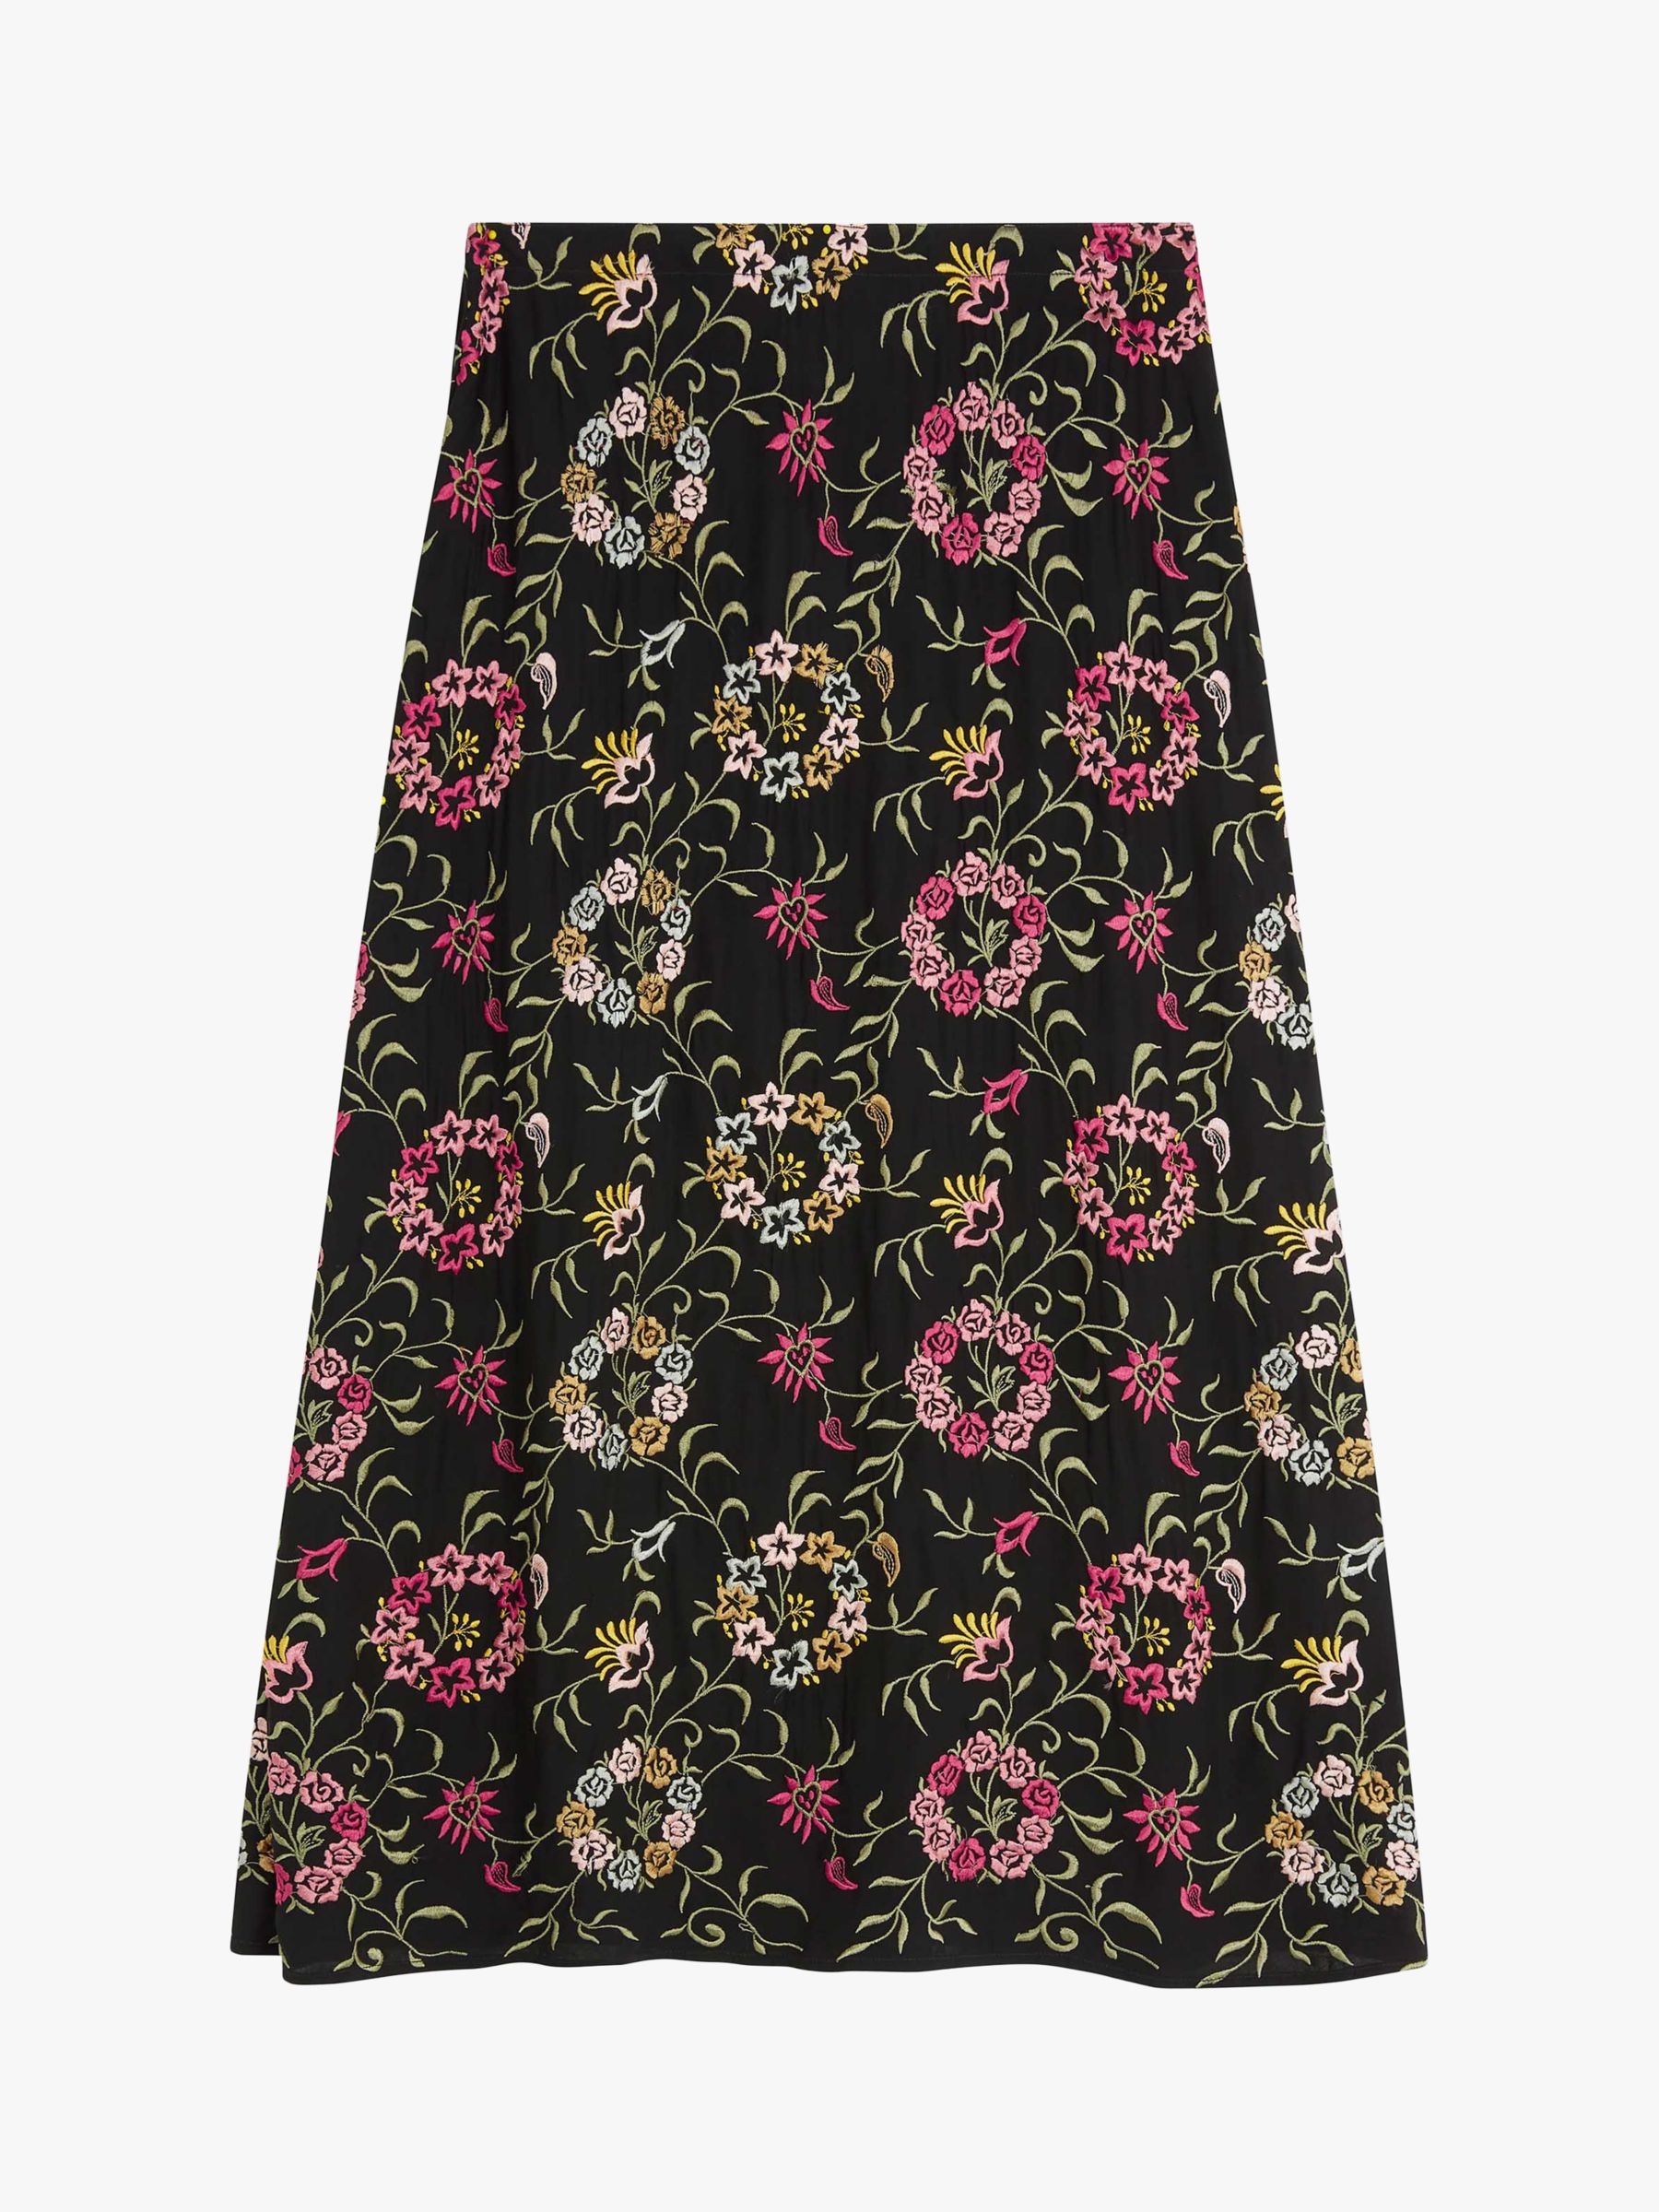 Brora Embroidered Floral Skirt, Black/Multi